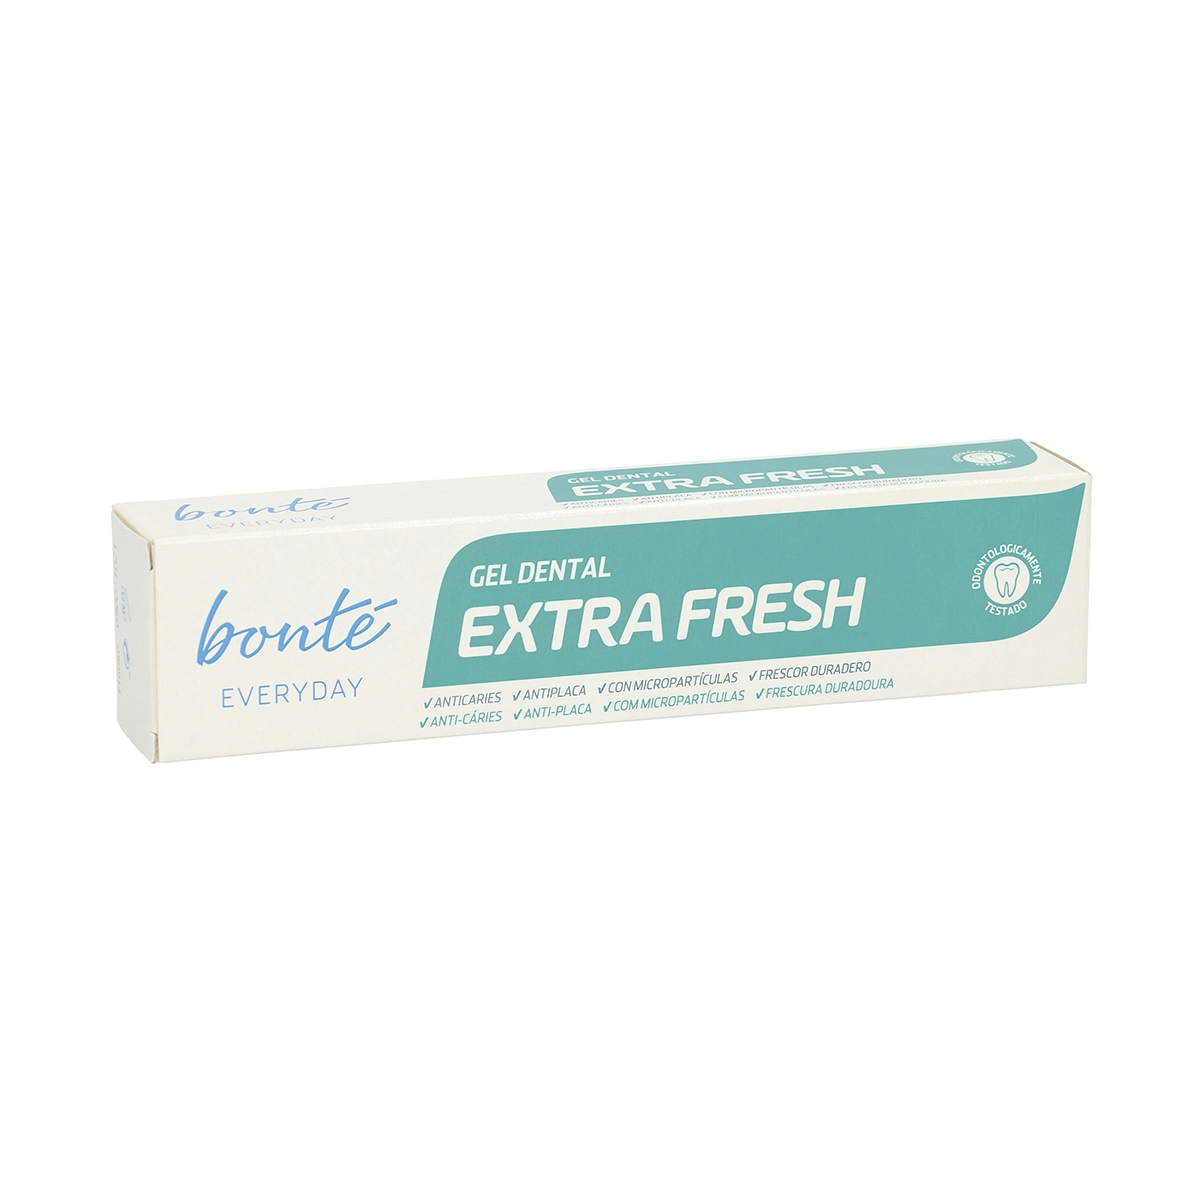 Dentífrico extra fresh BONTE tubo 100 ml